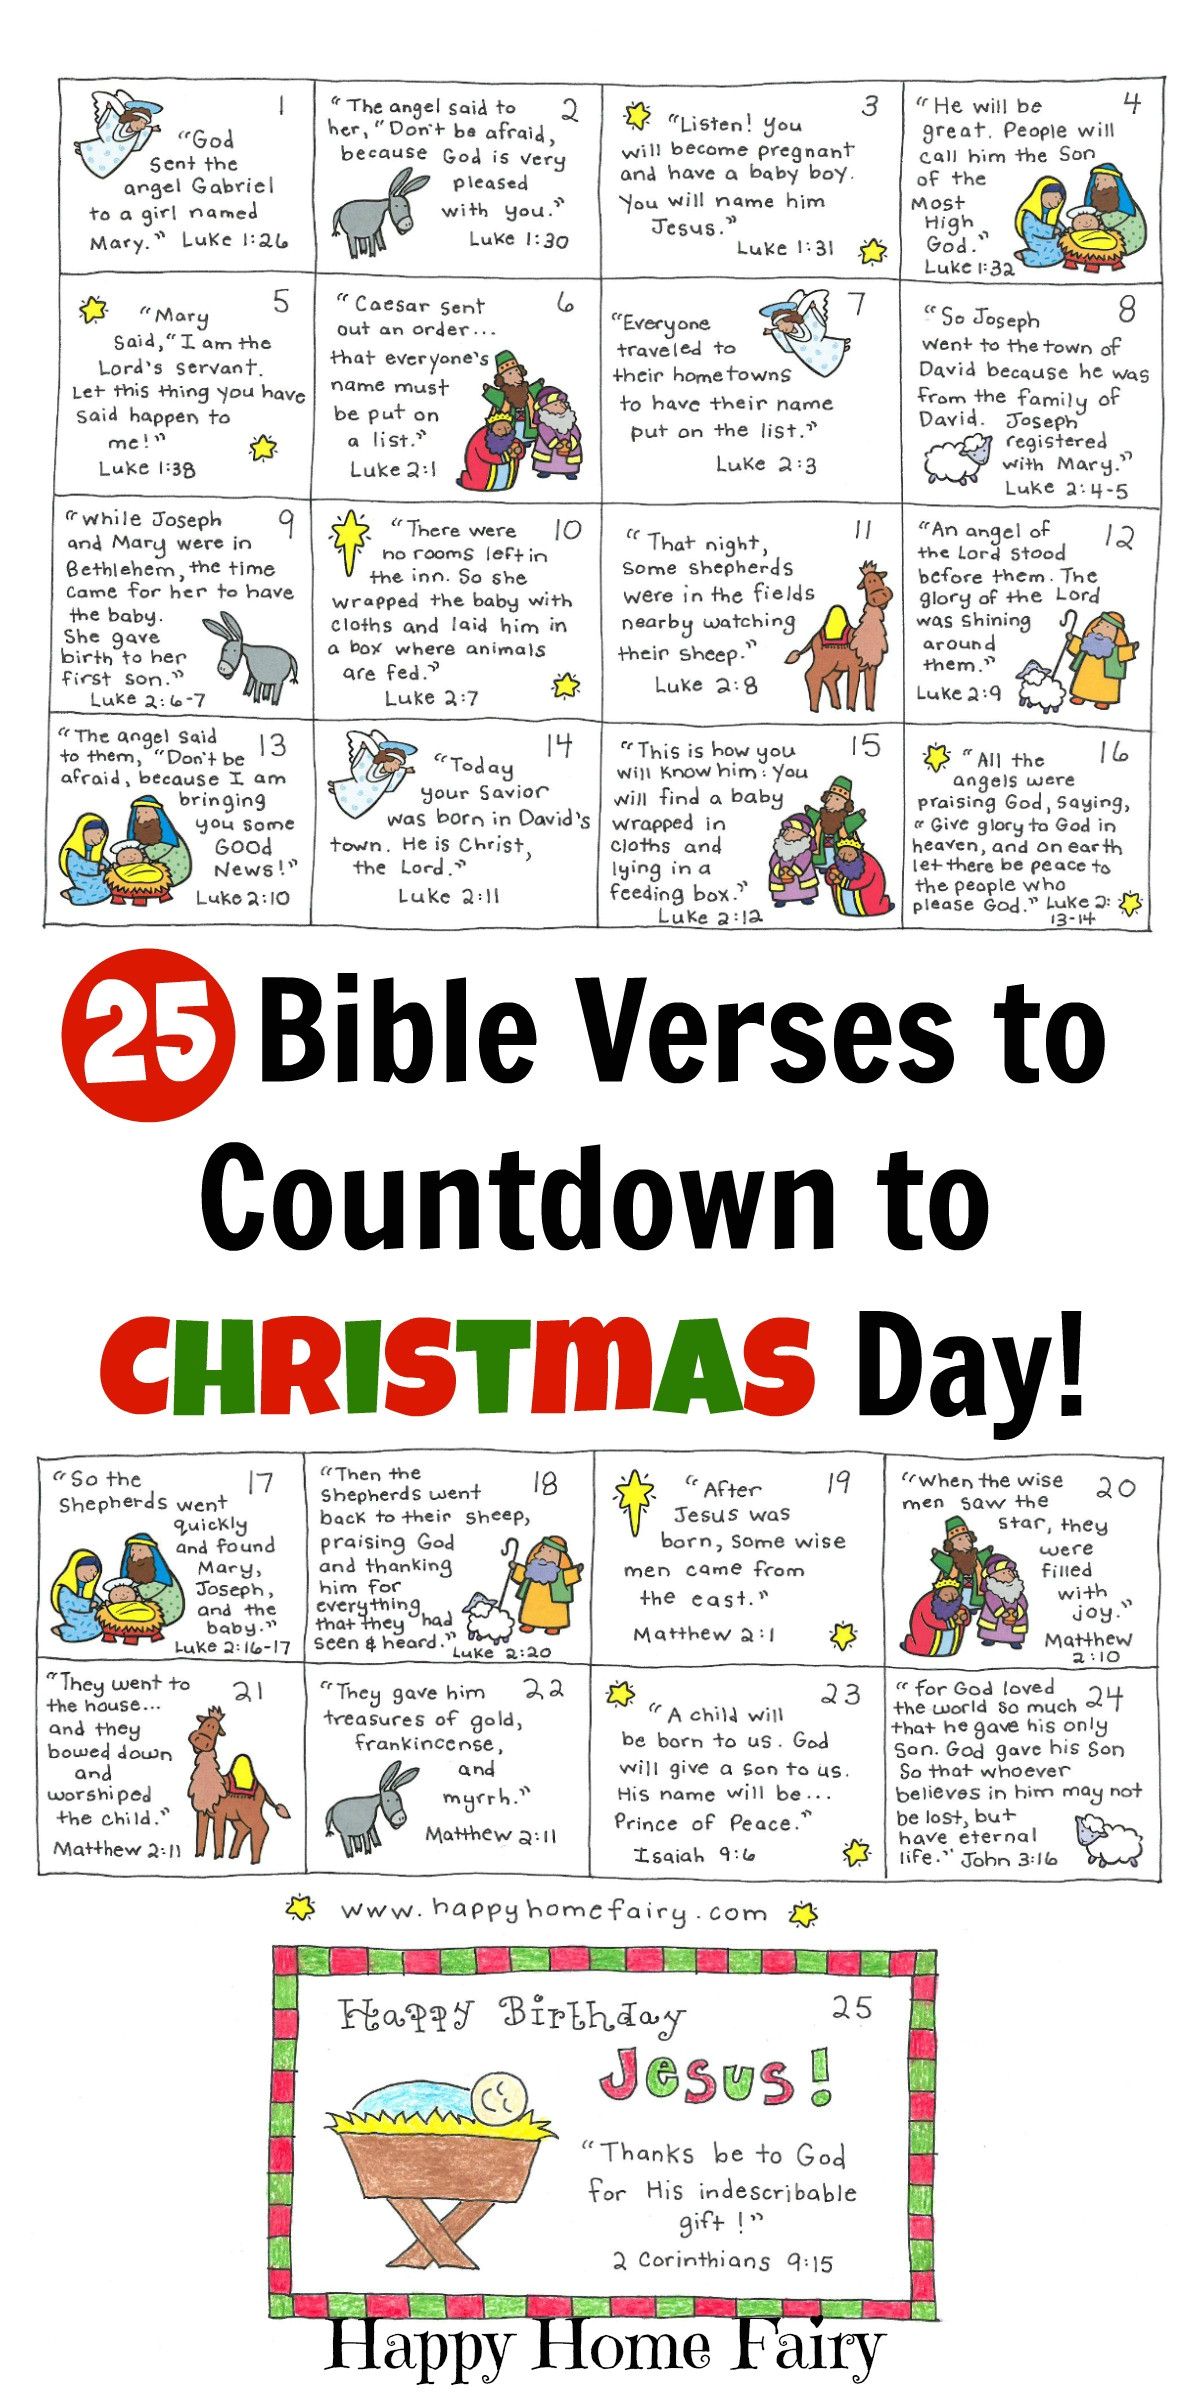 25 bible verses to countdown to christmas jpg